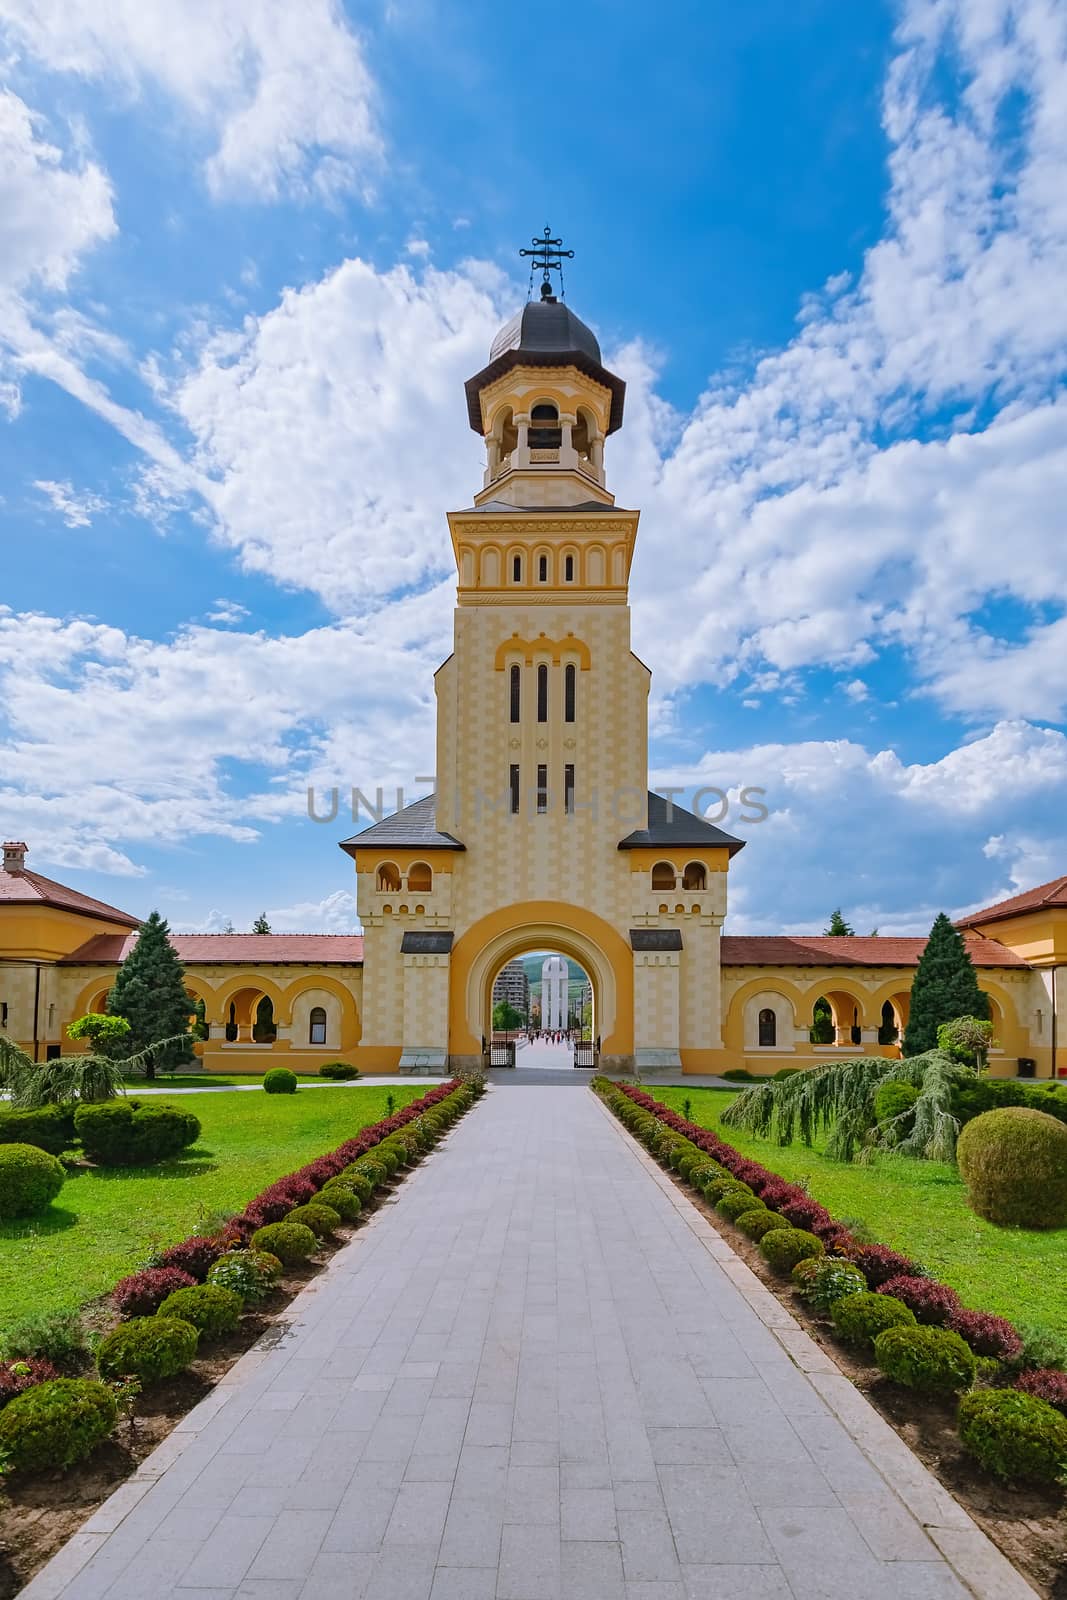 Bell Tower of Coronation Cathedral in Alba Carolina Citadel, Alba Iulia, Romania